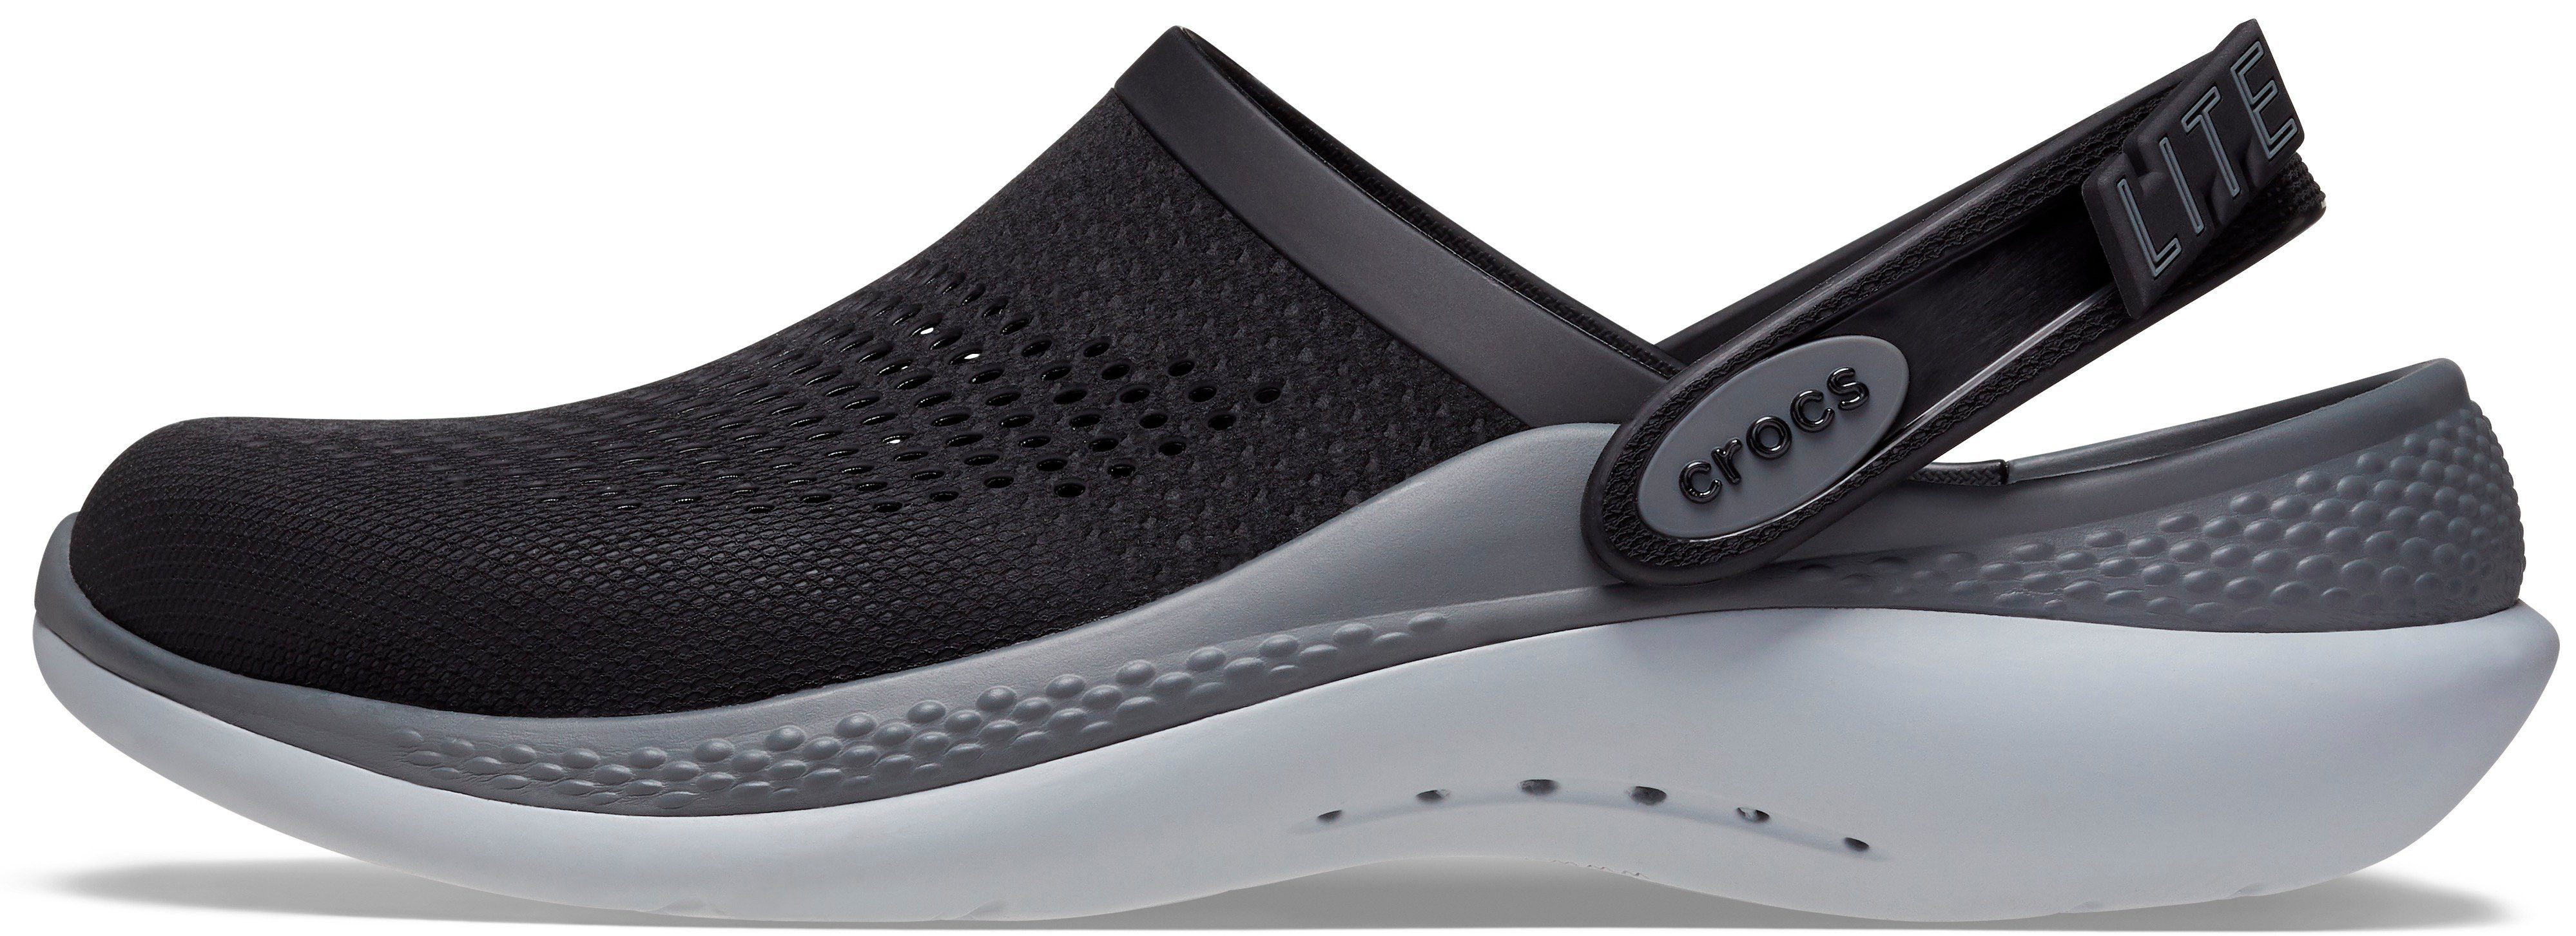 LiteRide schwarz-grau gepolsterter Innensohle Clog 360 Crocs mit